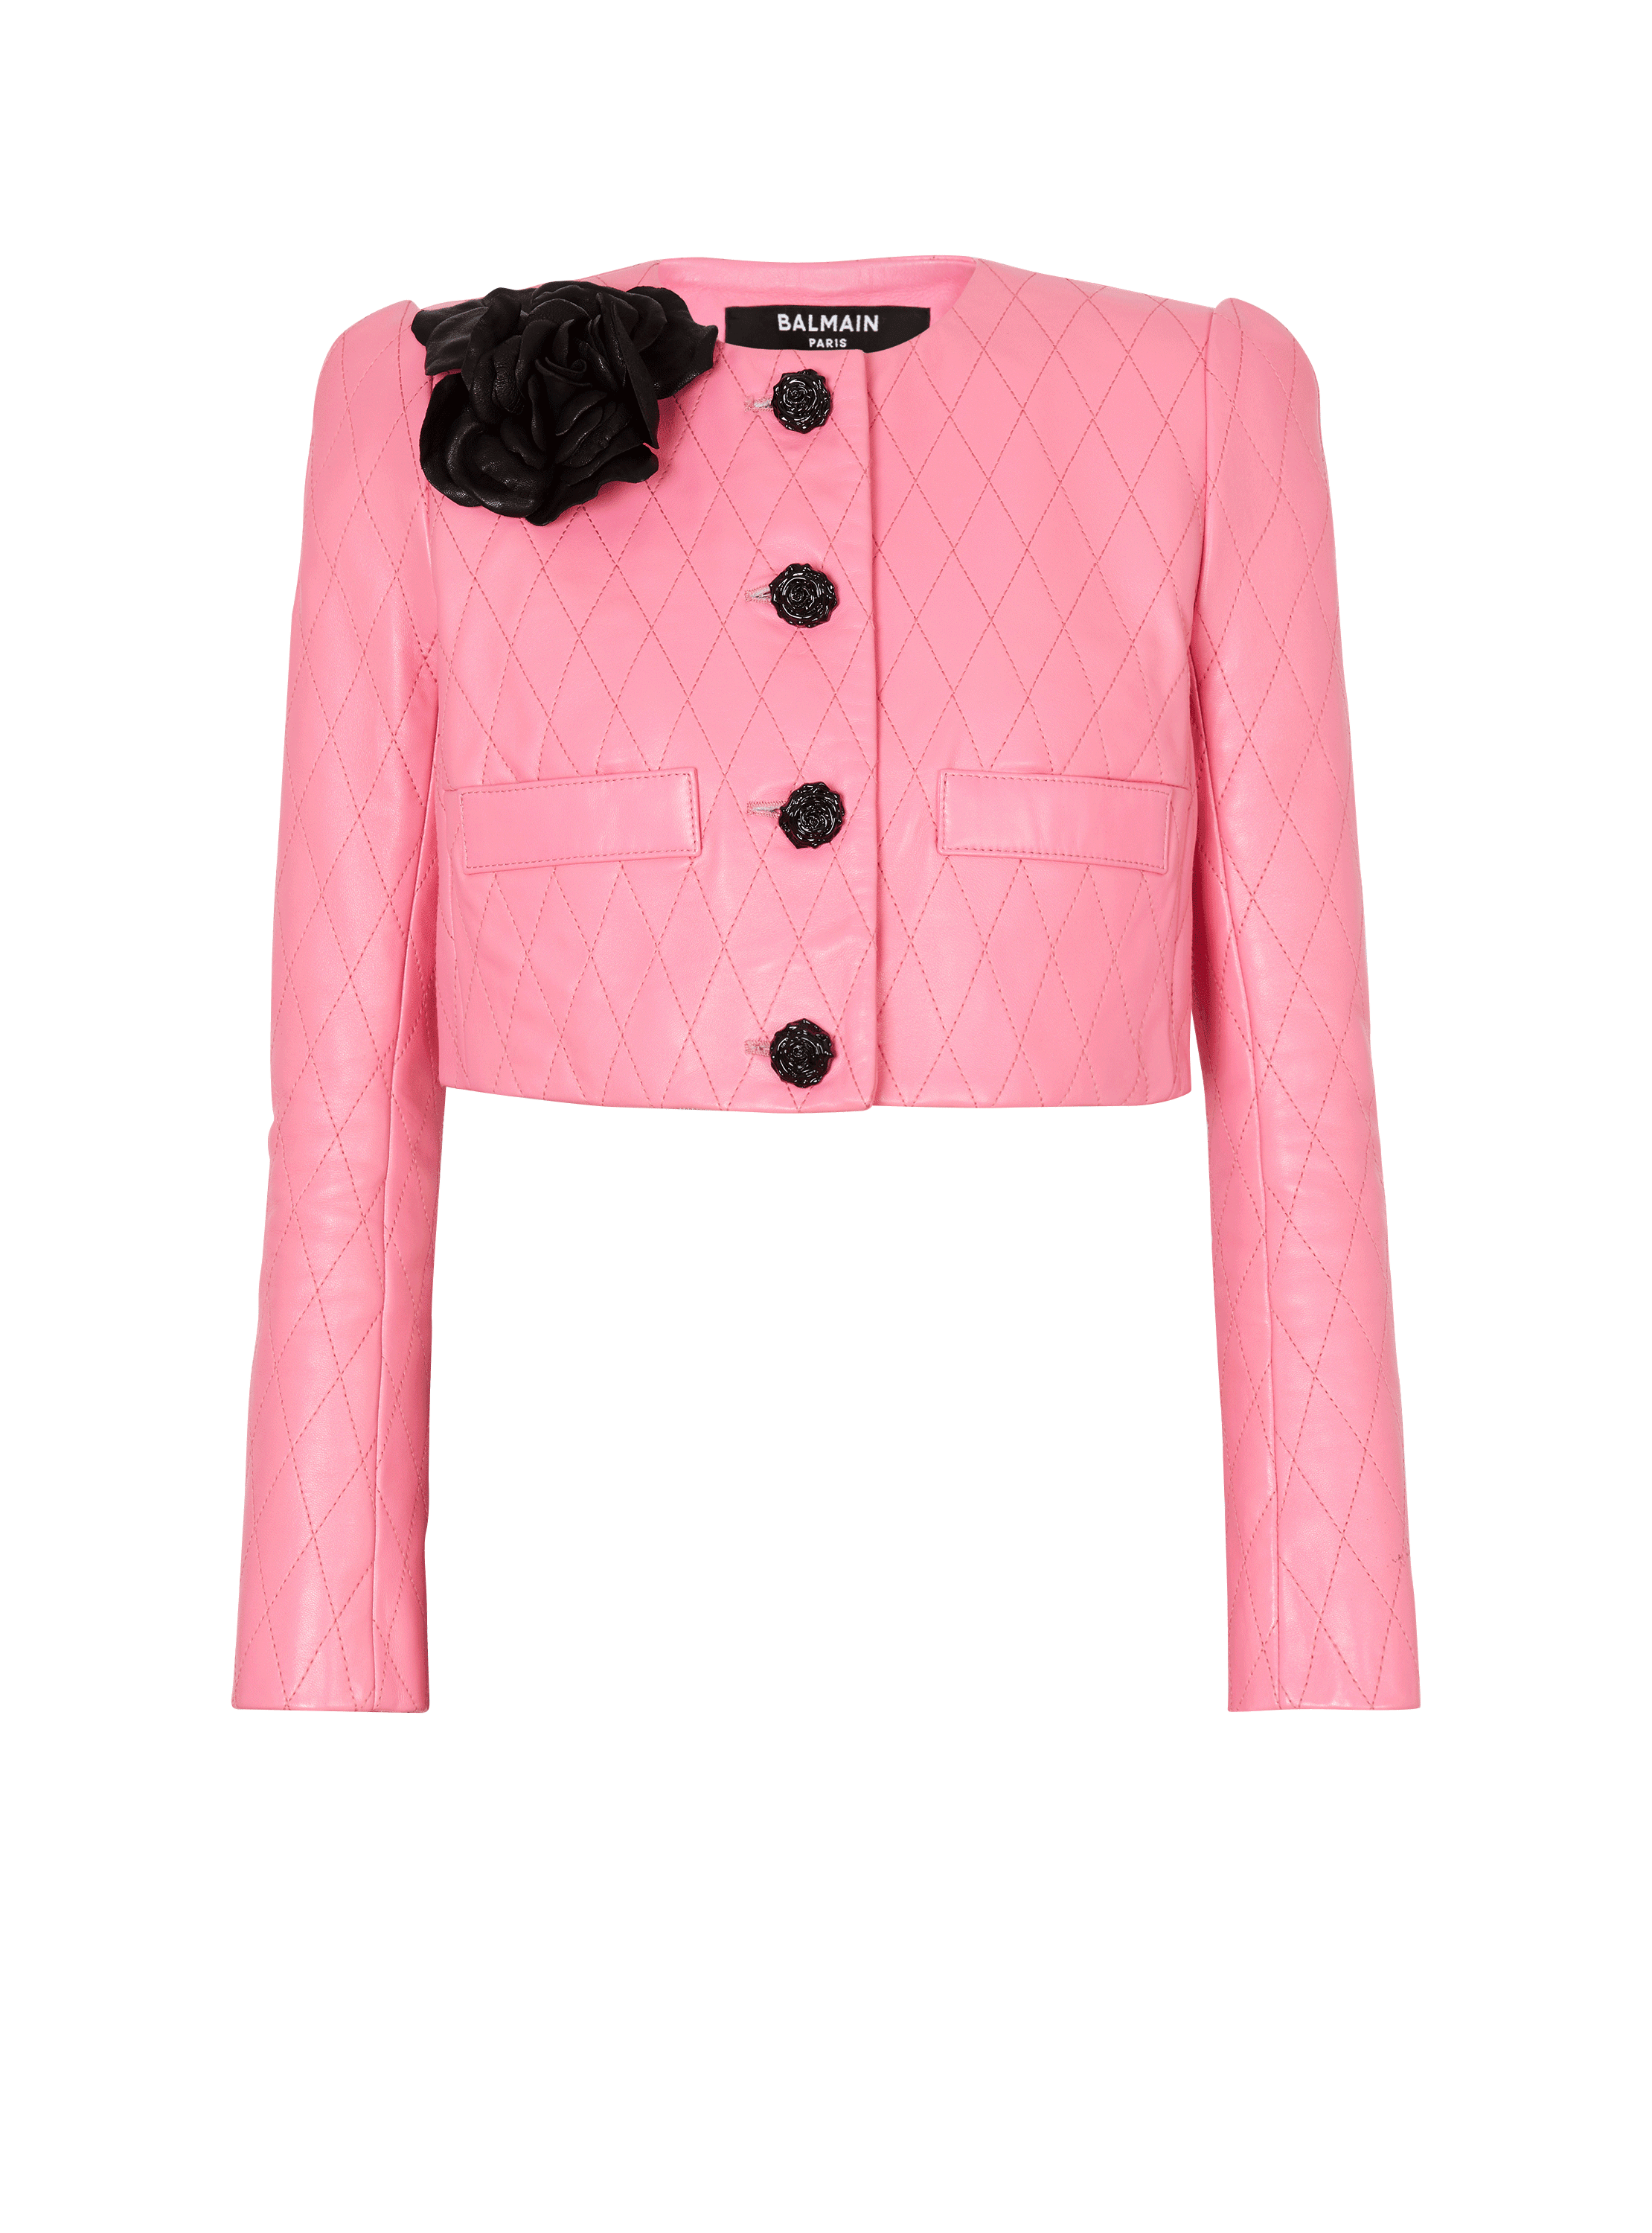 Kurze Jacke aus gestepptem Leder, rosa, hi-res